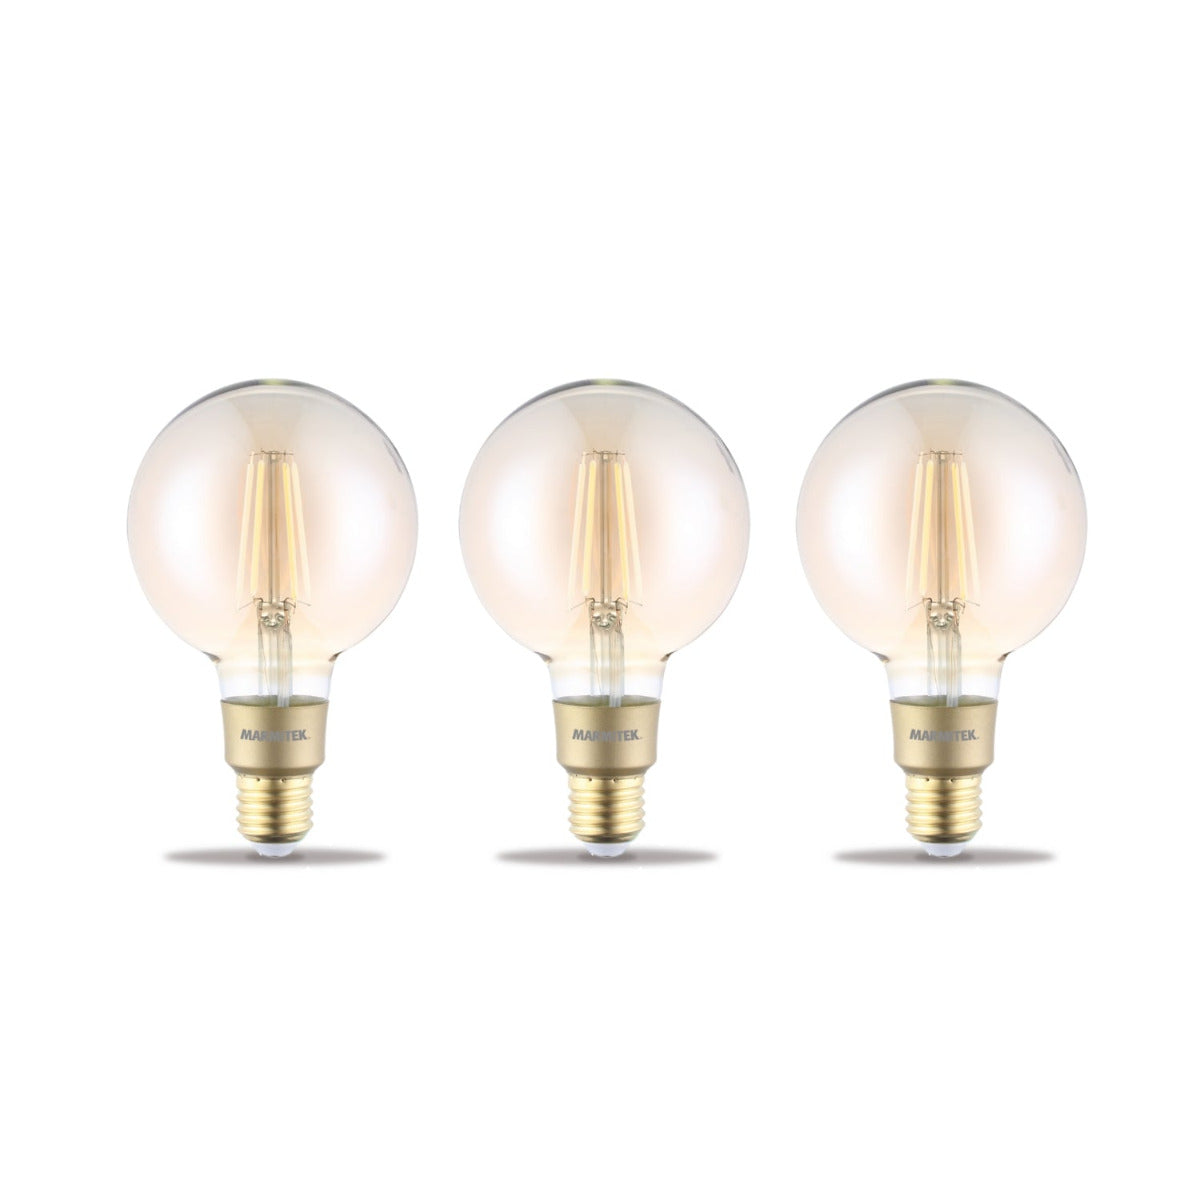 Glow LI - Filament bulb - Product Image 3 pack | Marmitek